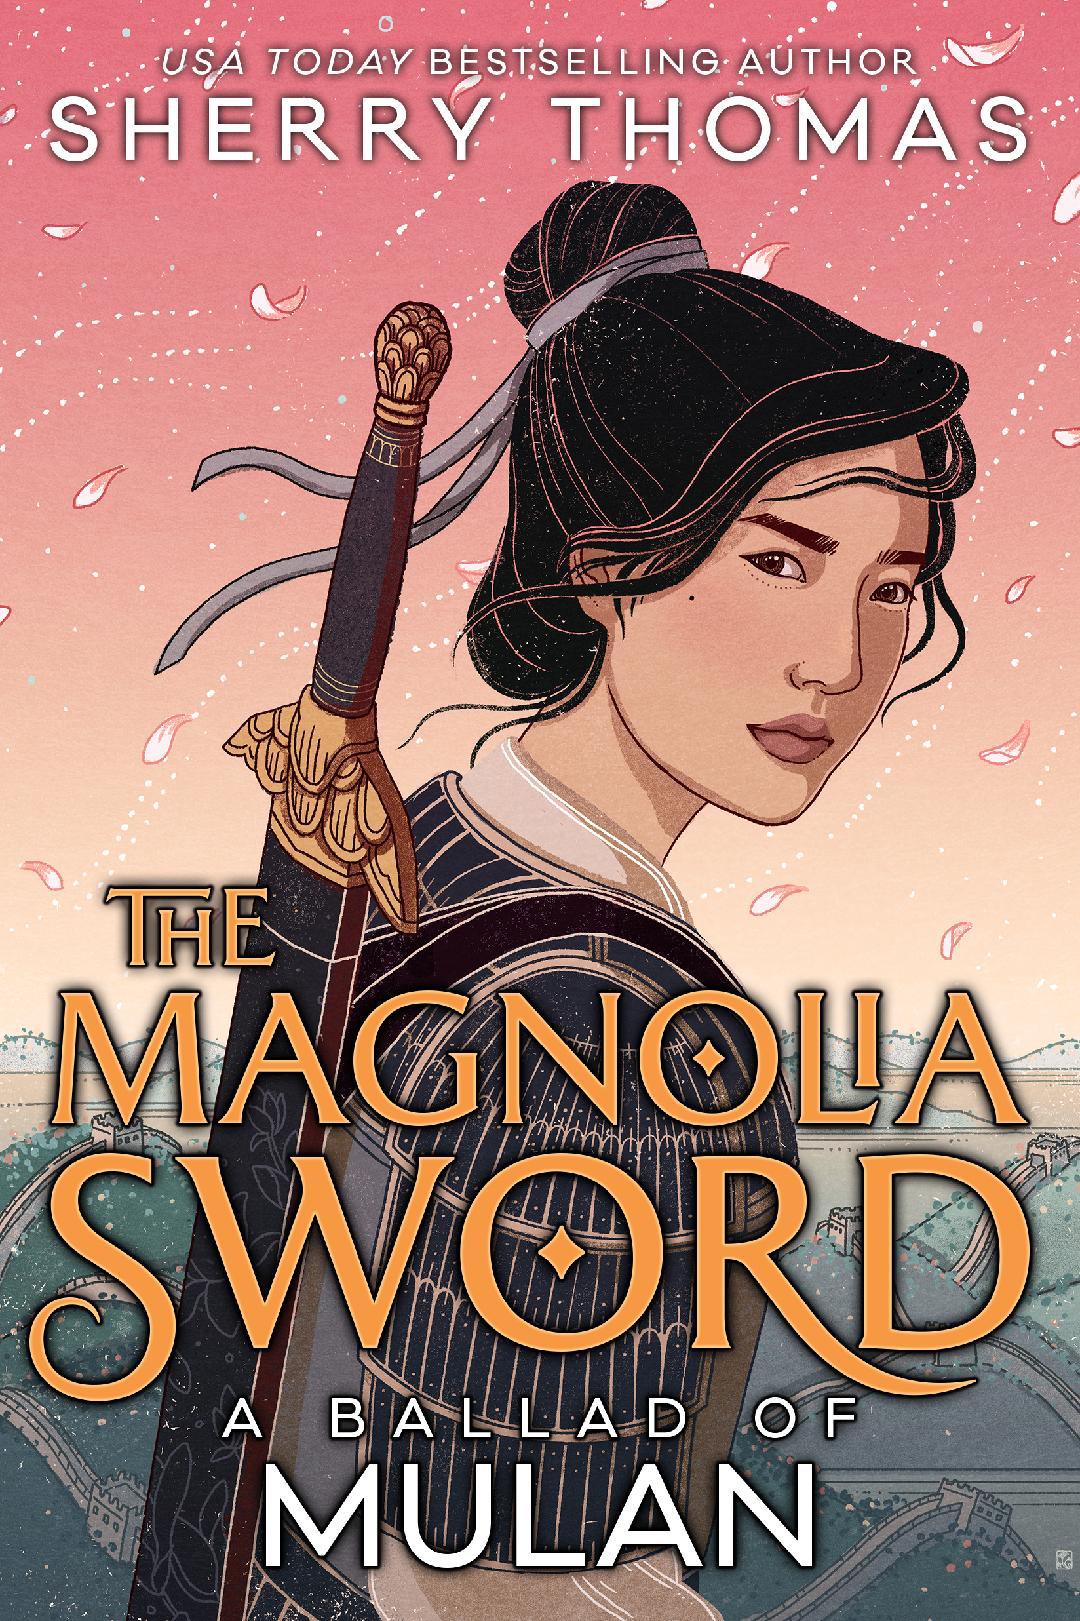 The Magnolia Sword A Ballad of Mulan